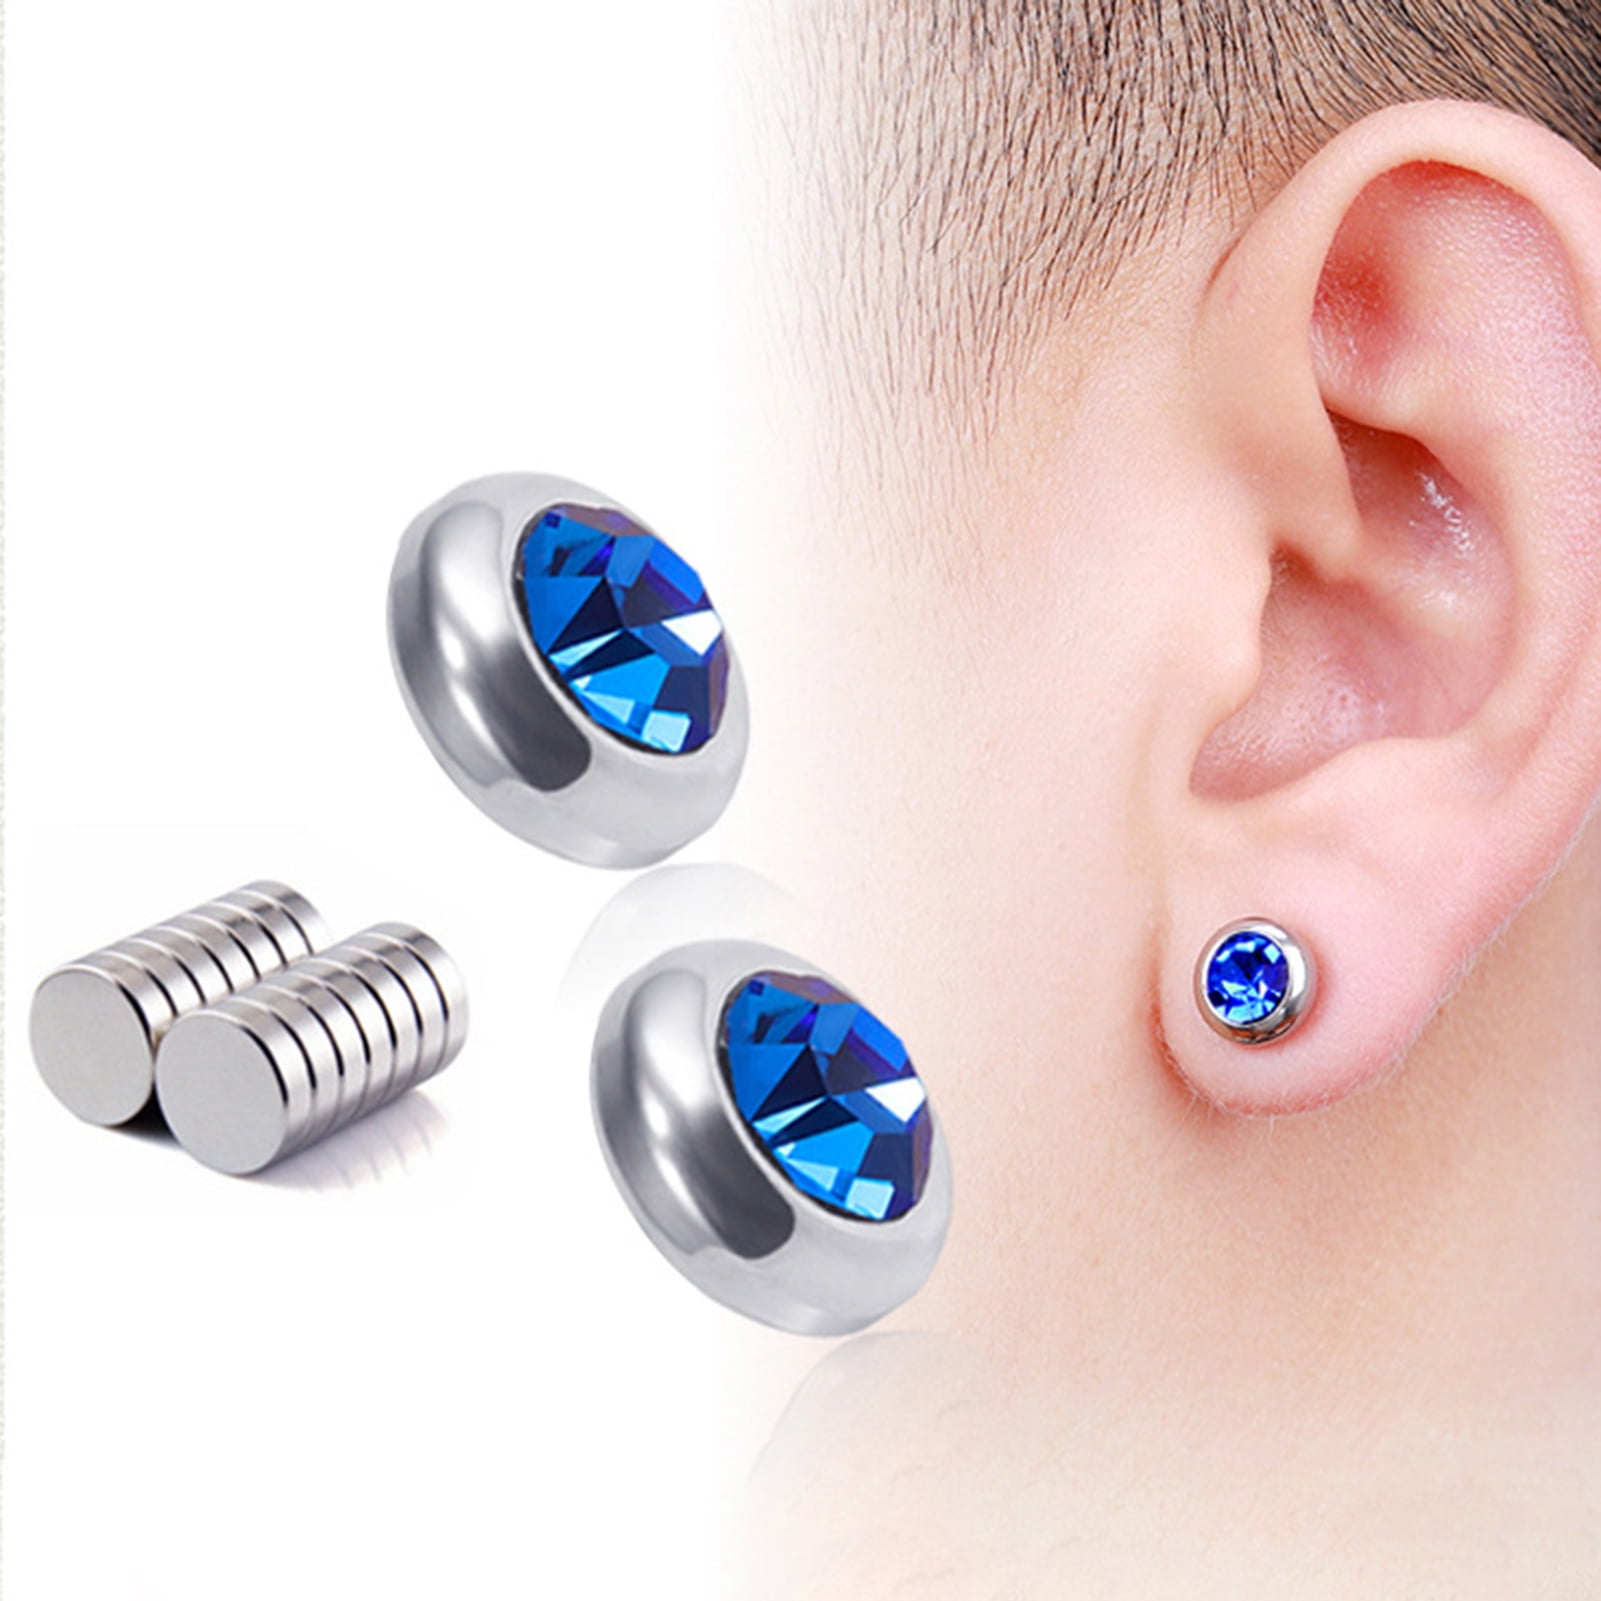 Essential Men's Hoops - Popular mens earrings / silver hoops for him -  Nadin Art Design - Personalized Jewelry